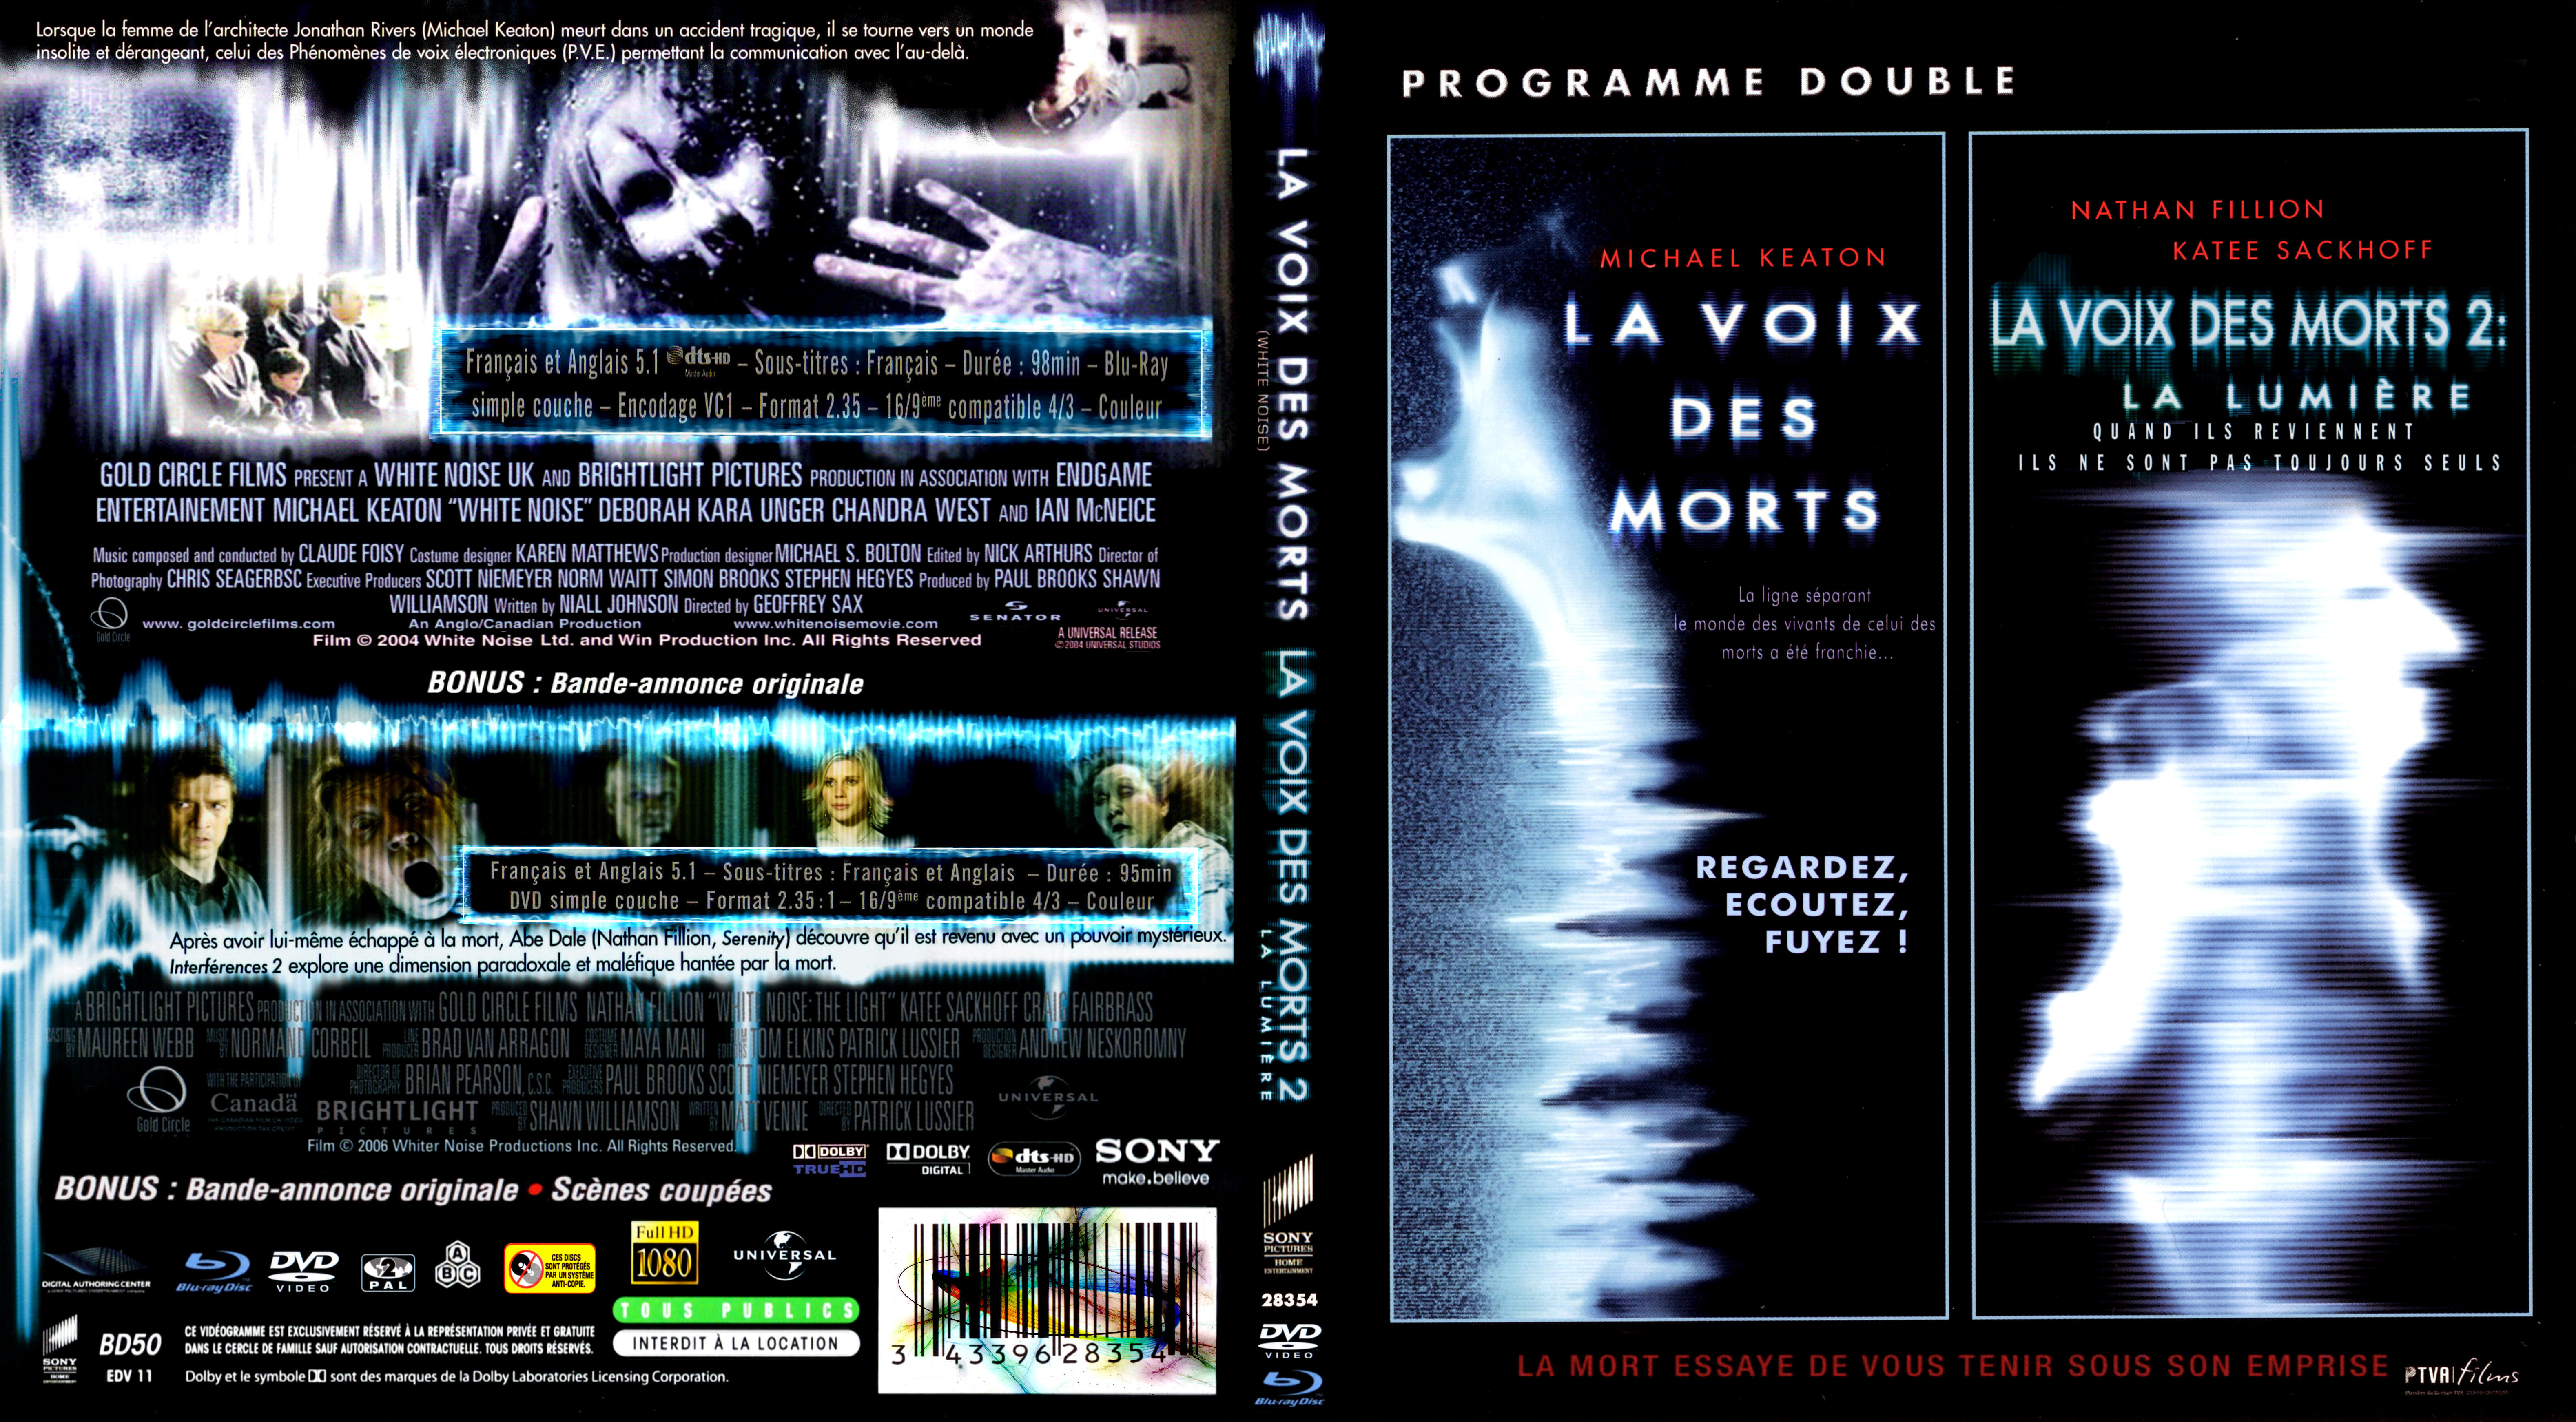 Jaquette DVD La voix des morts 1 & 2 custom (BLU-RAY) 